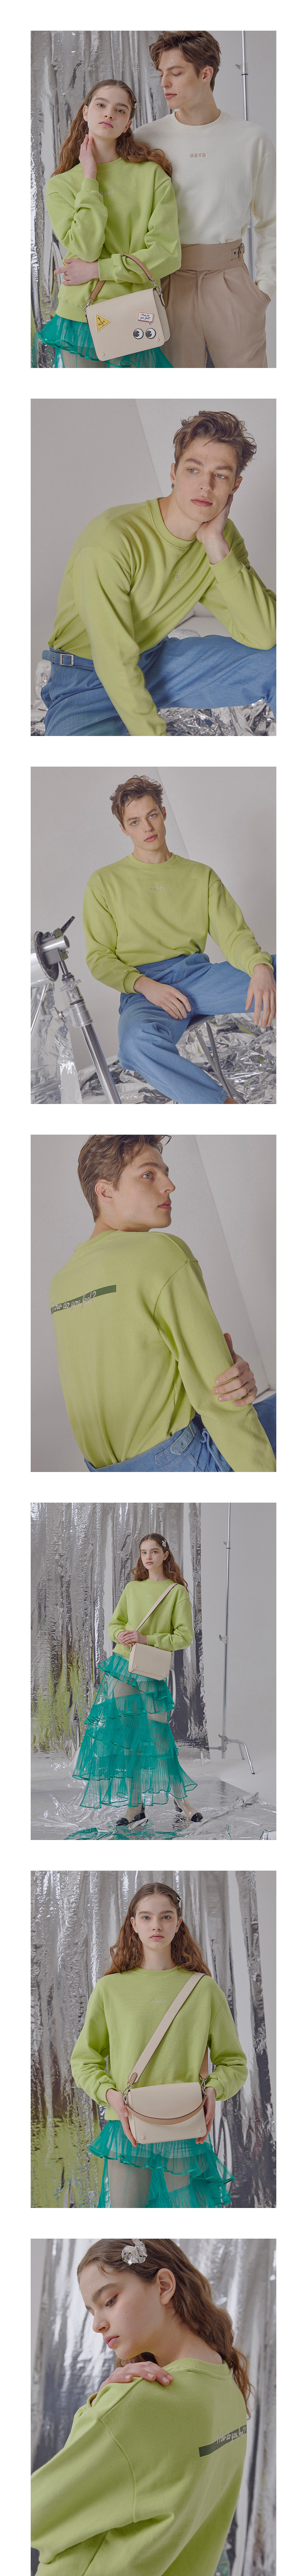 BBYB Lettering Loose Fit Sweatshirt (Lime)